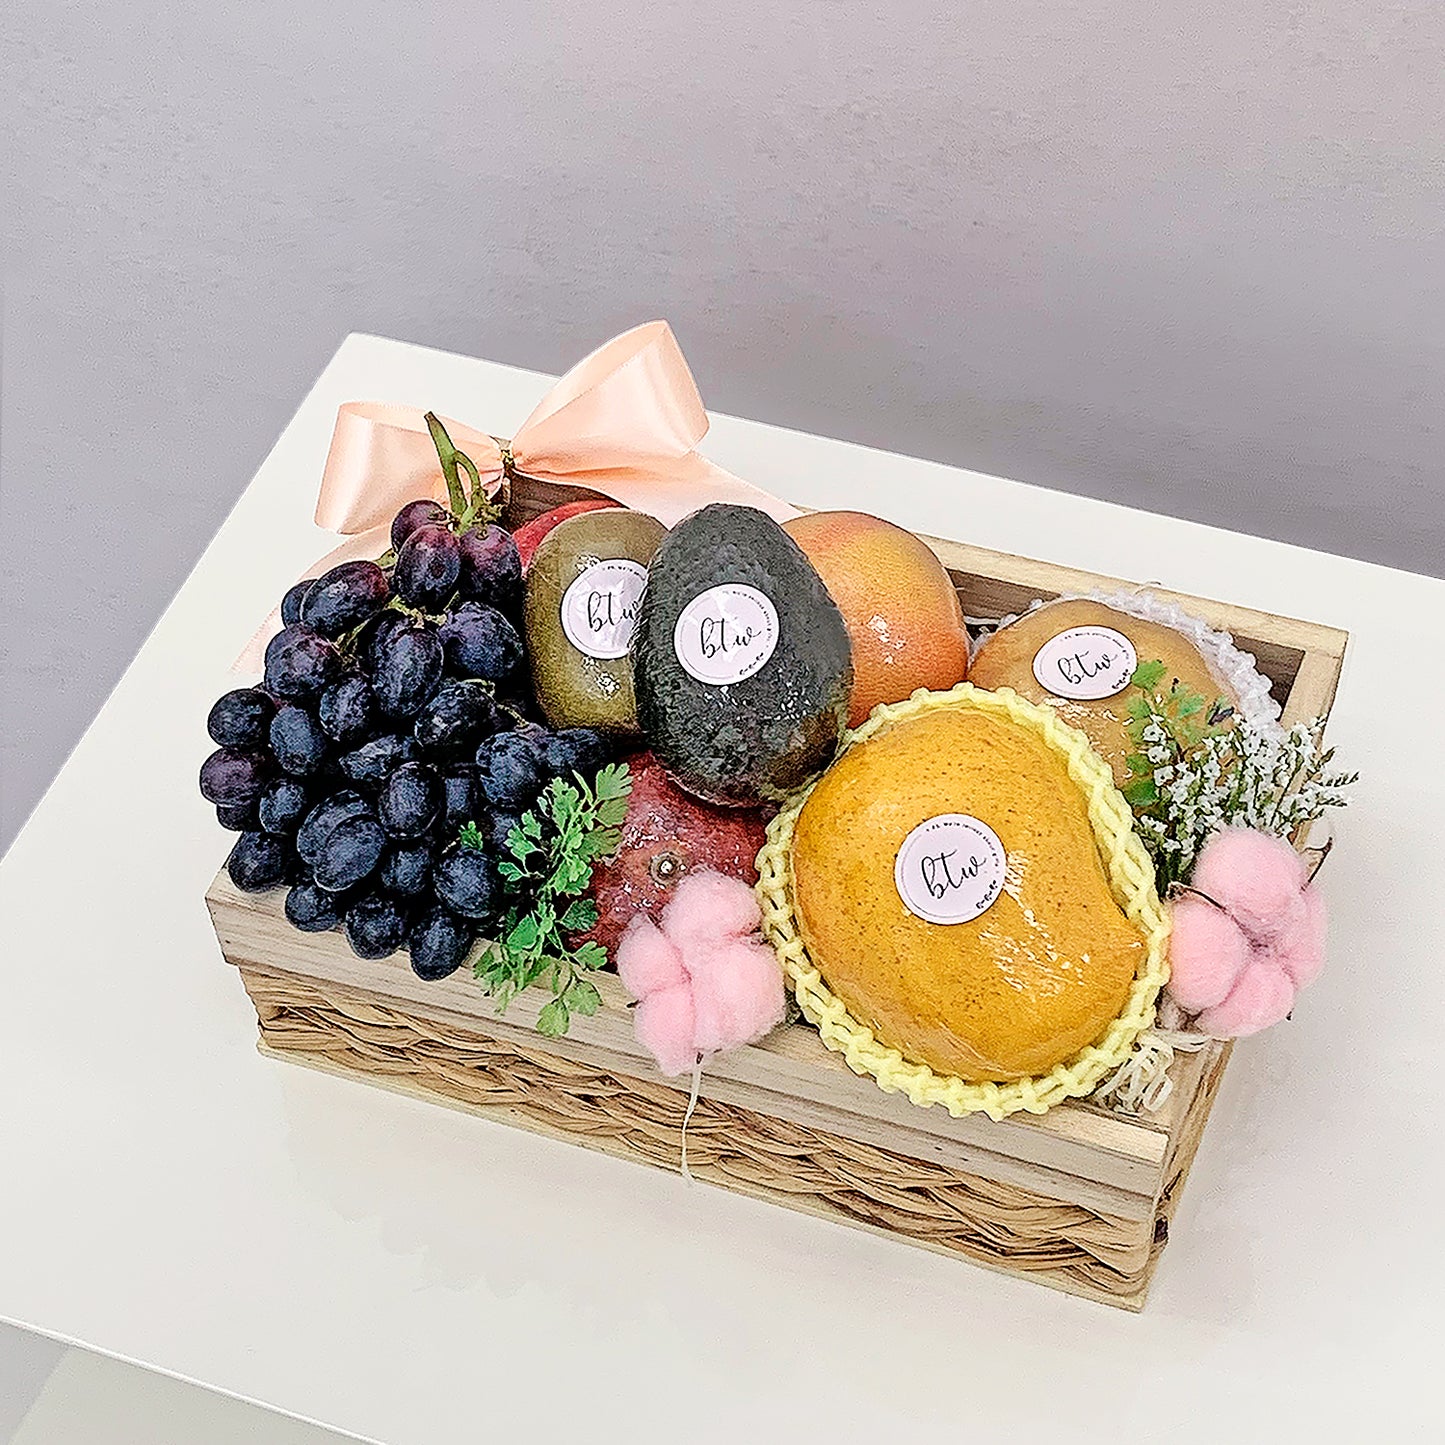 Spring’s Blessings Seasonal Fruits Basket